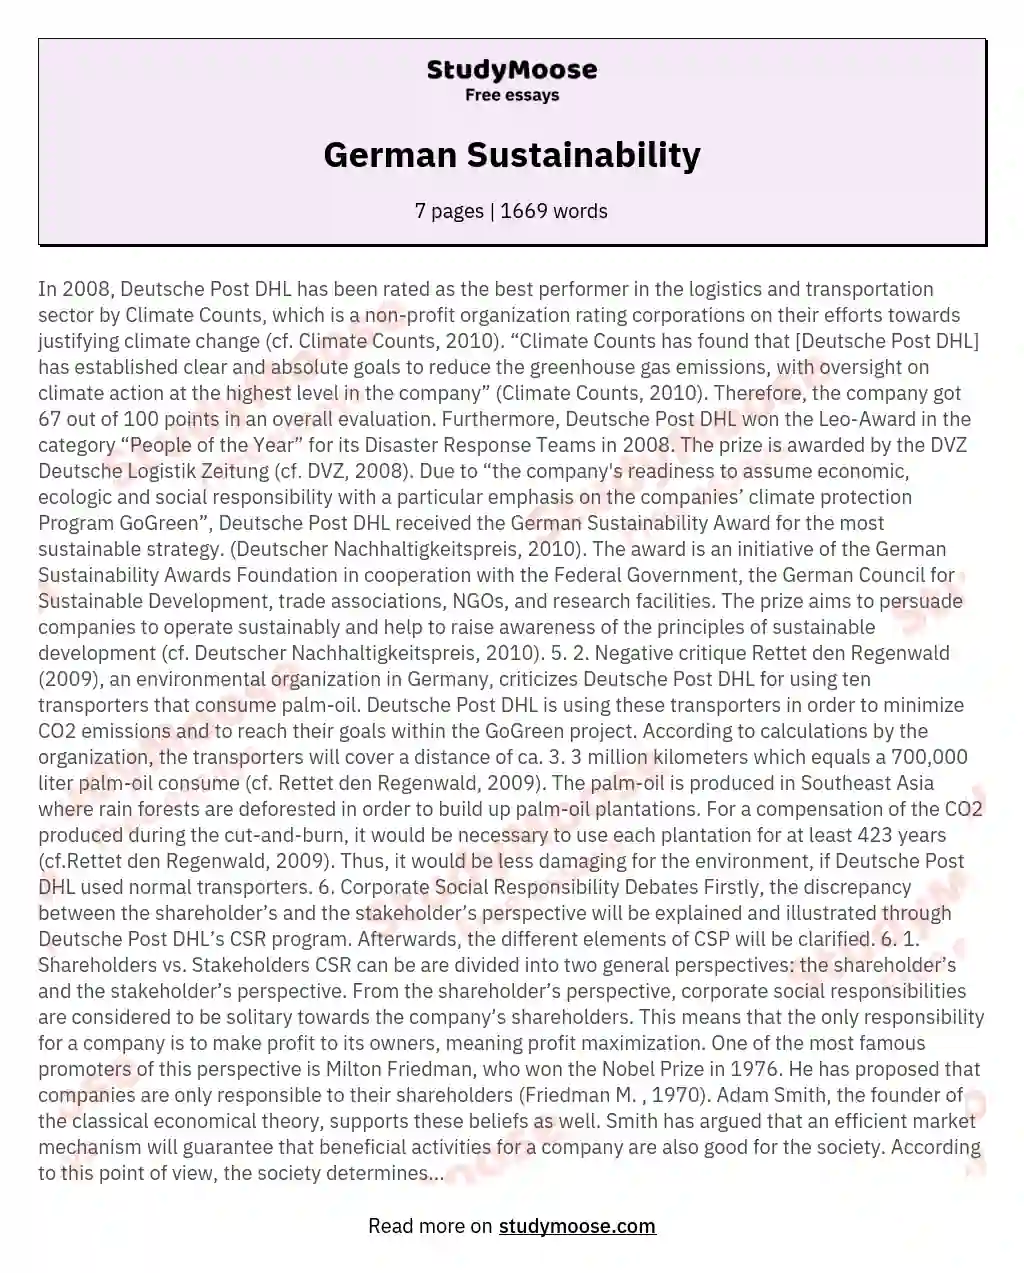 German Sustainability essay